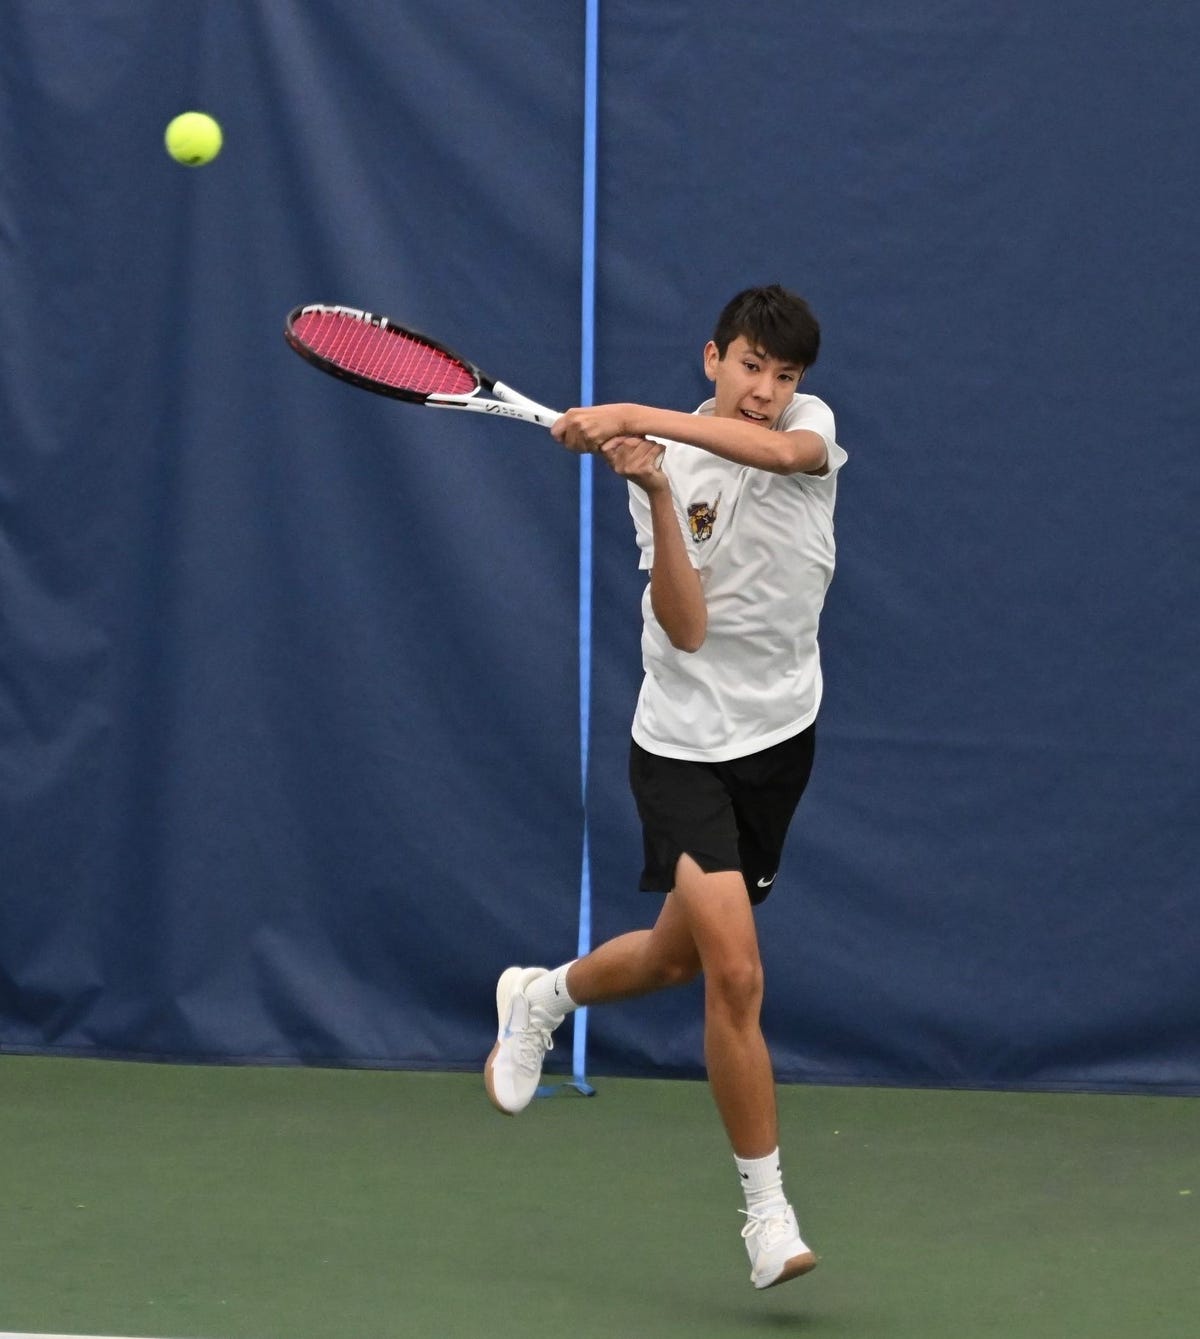 Lexington Dominates District Tennis Spots with Senior Karl Etzel Making a Double Comeback